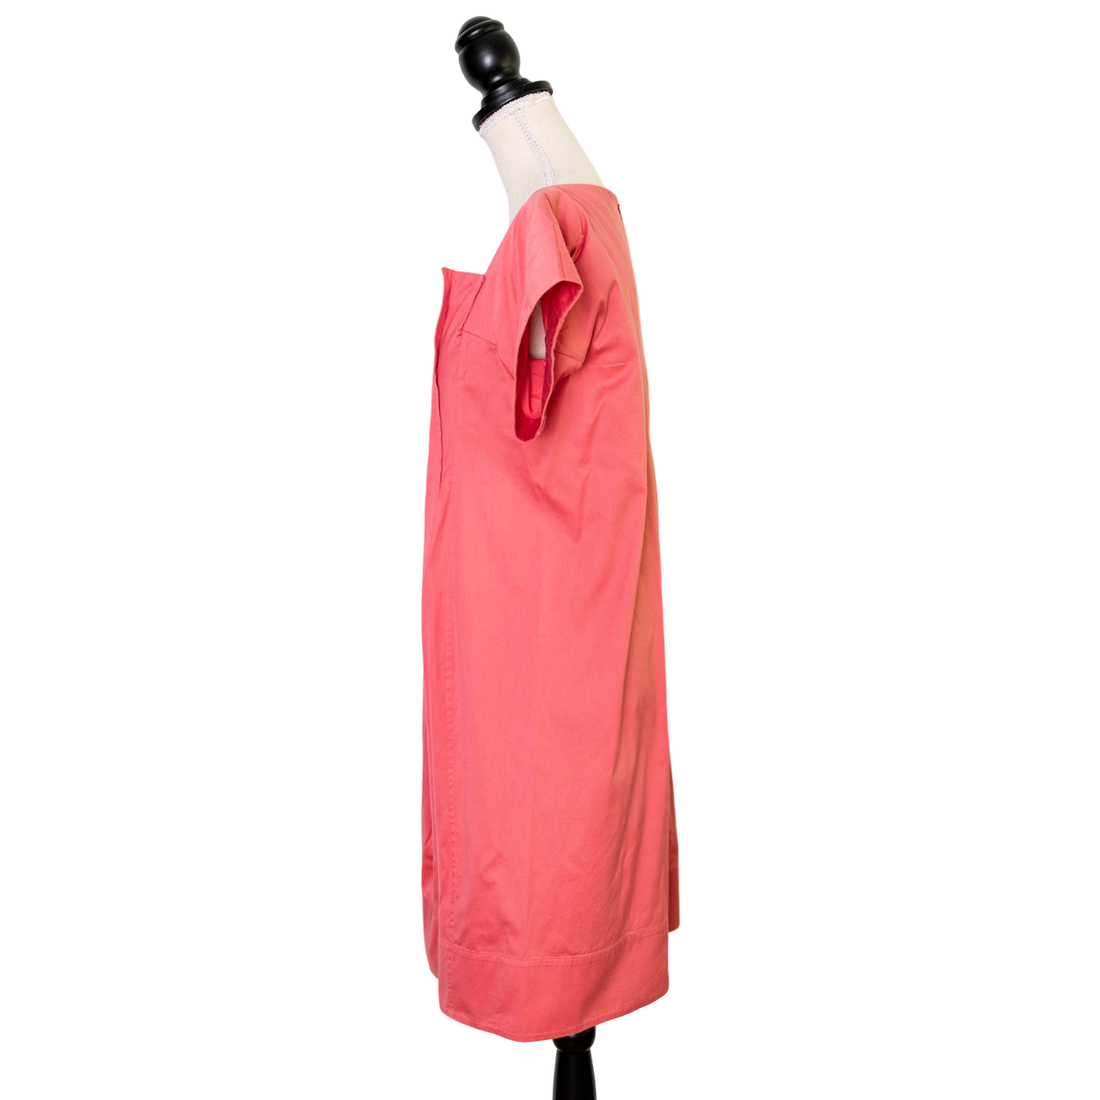 Jil Sander Pink cotton dress with inverted pleats